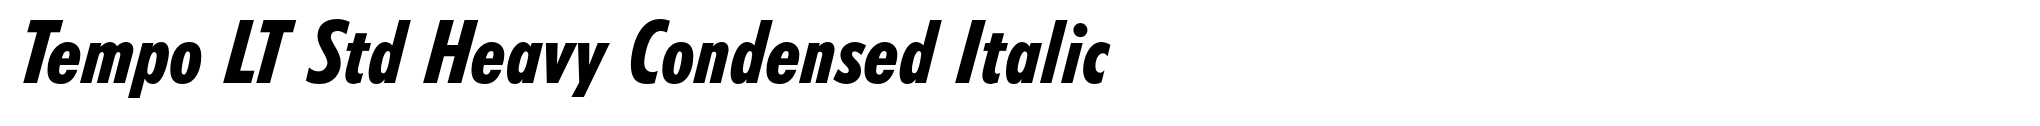 Tempo LT Std Heavy Condensed Italic image